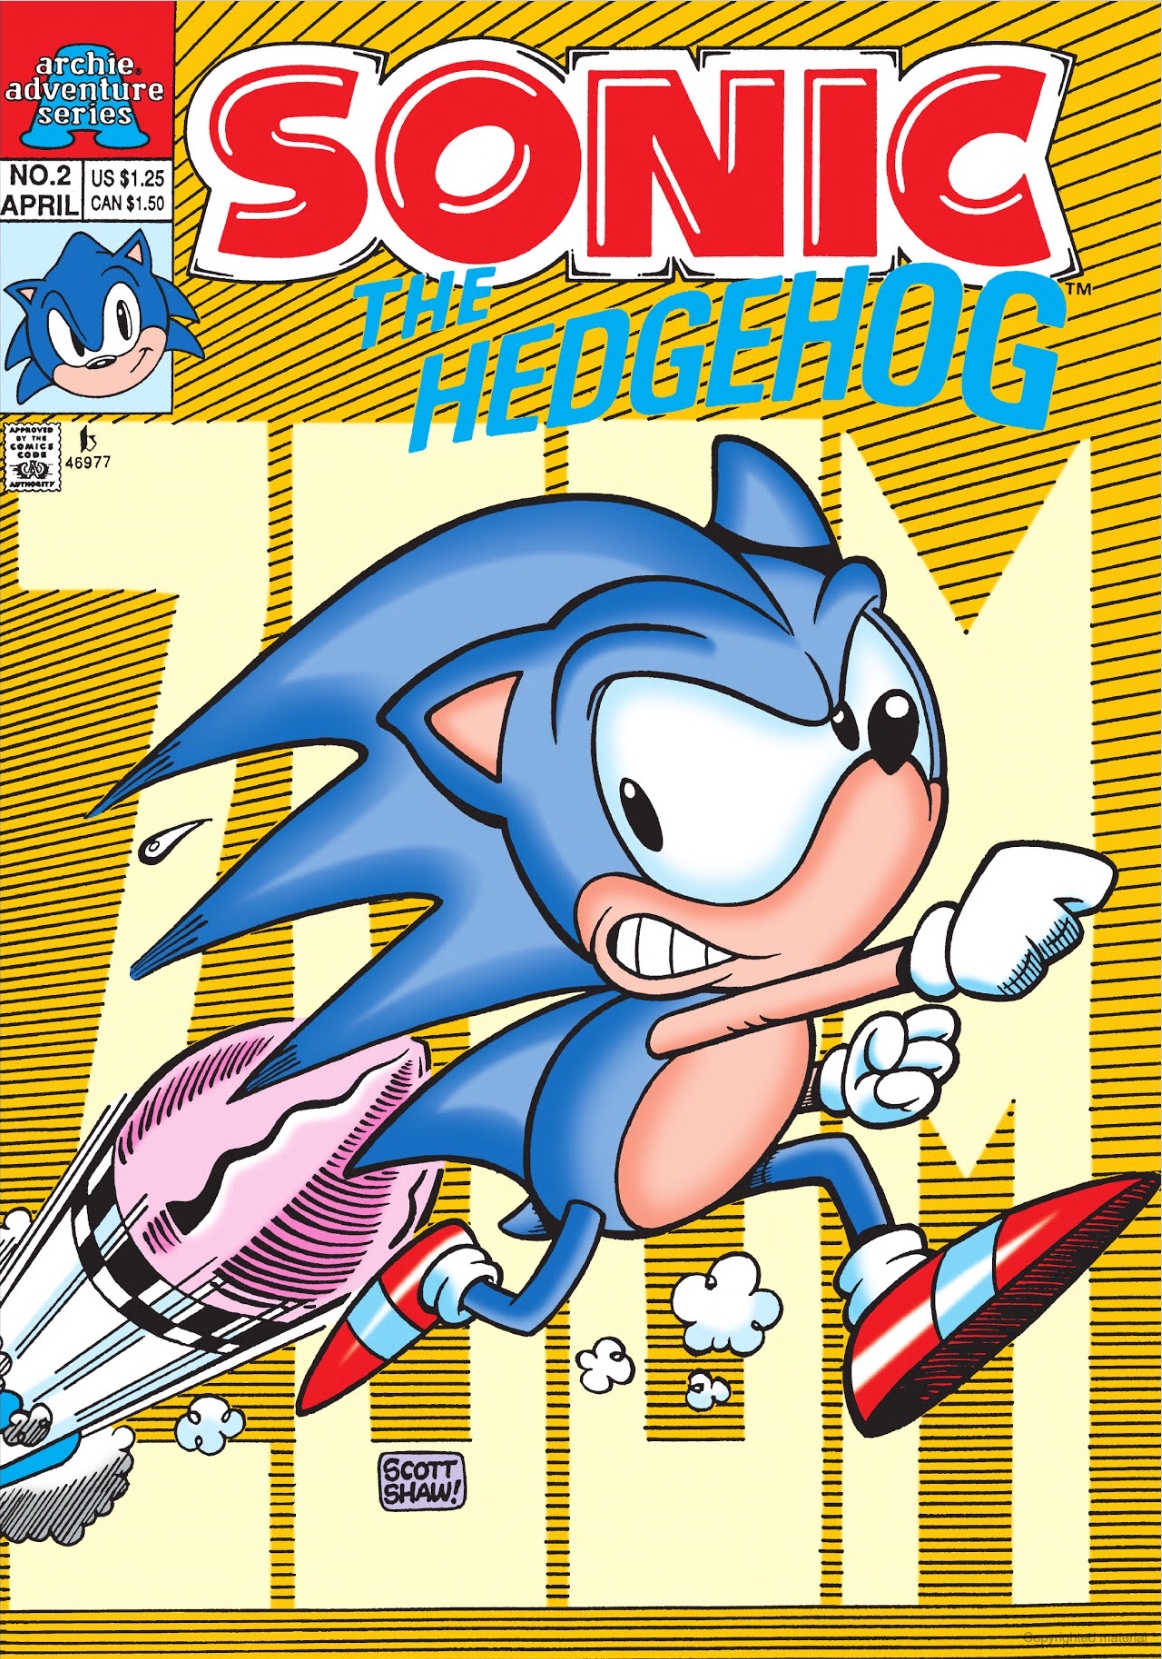 Archie Sonic the Hedgehog Issue 2 (miniseries) | Sonic News Network | FANDOM powered ...